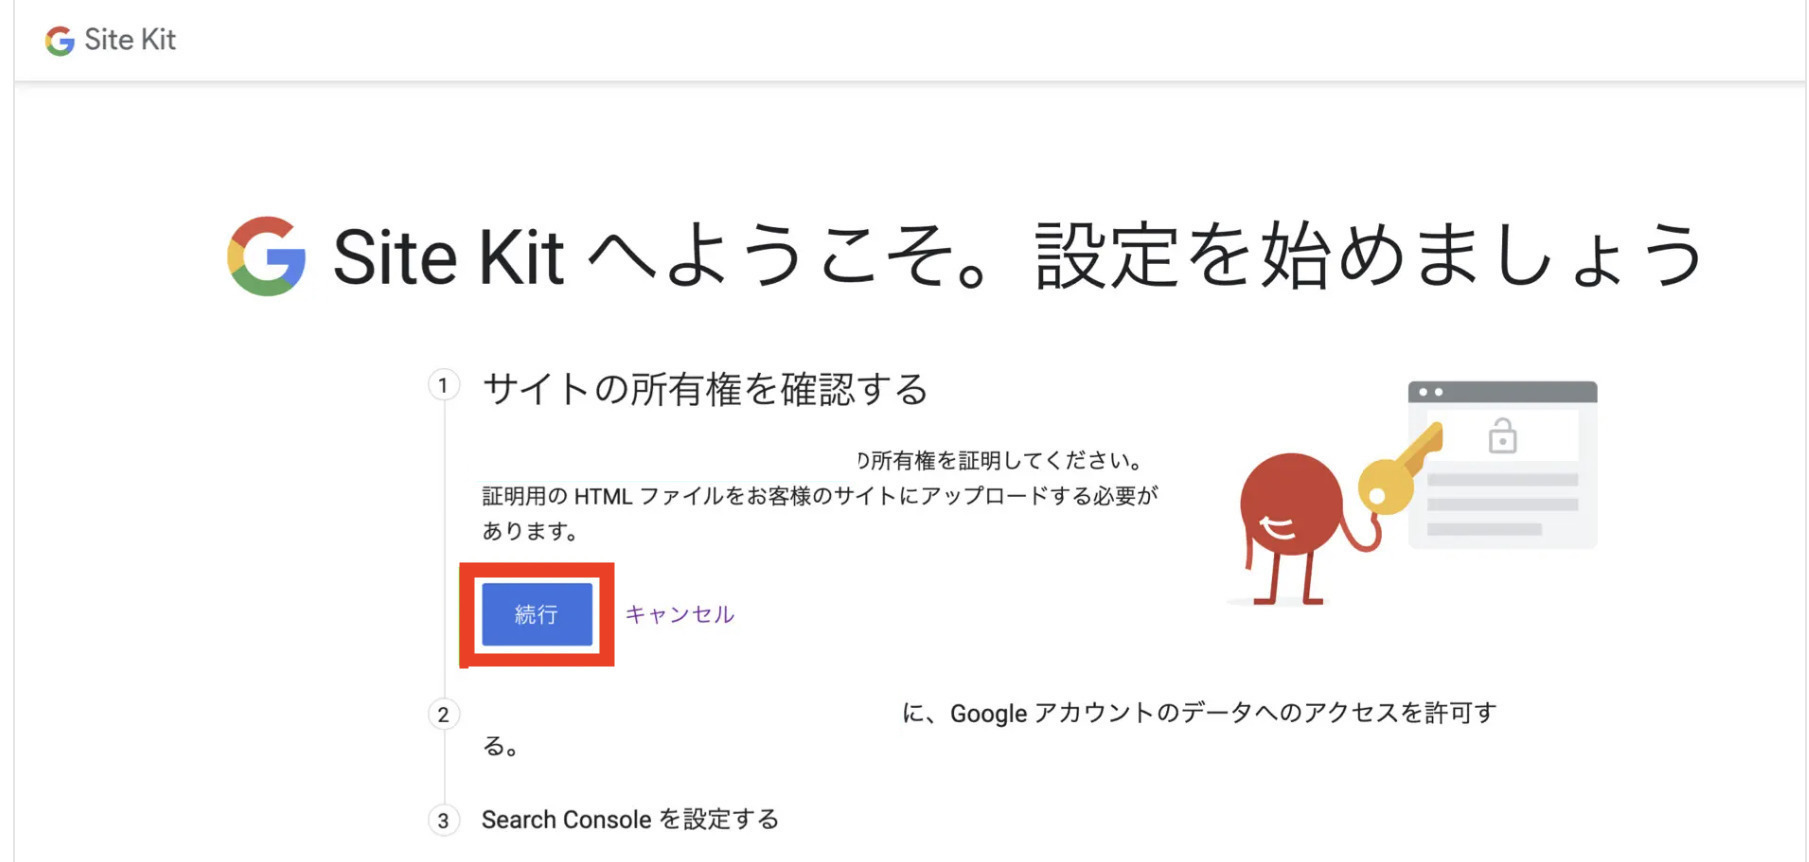 Site Kit by Google続行